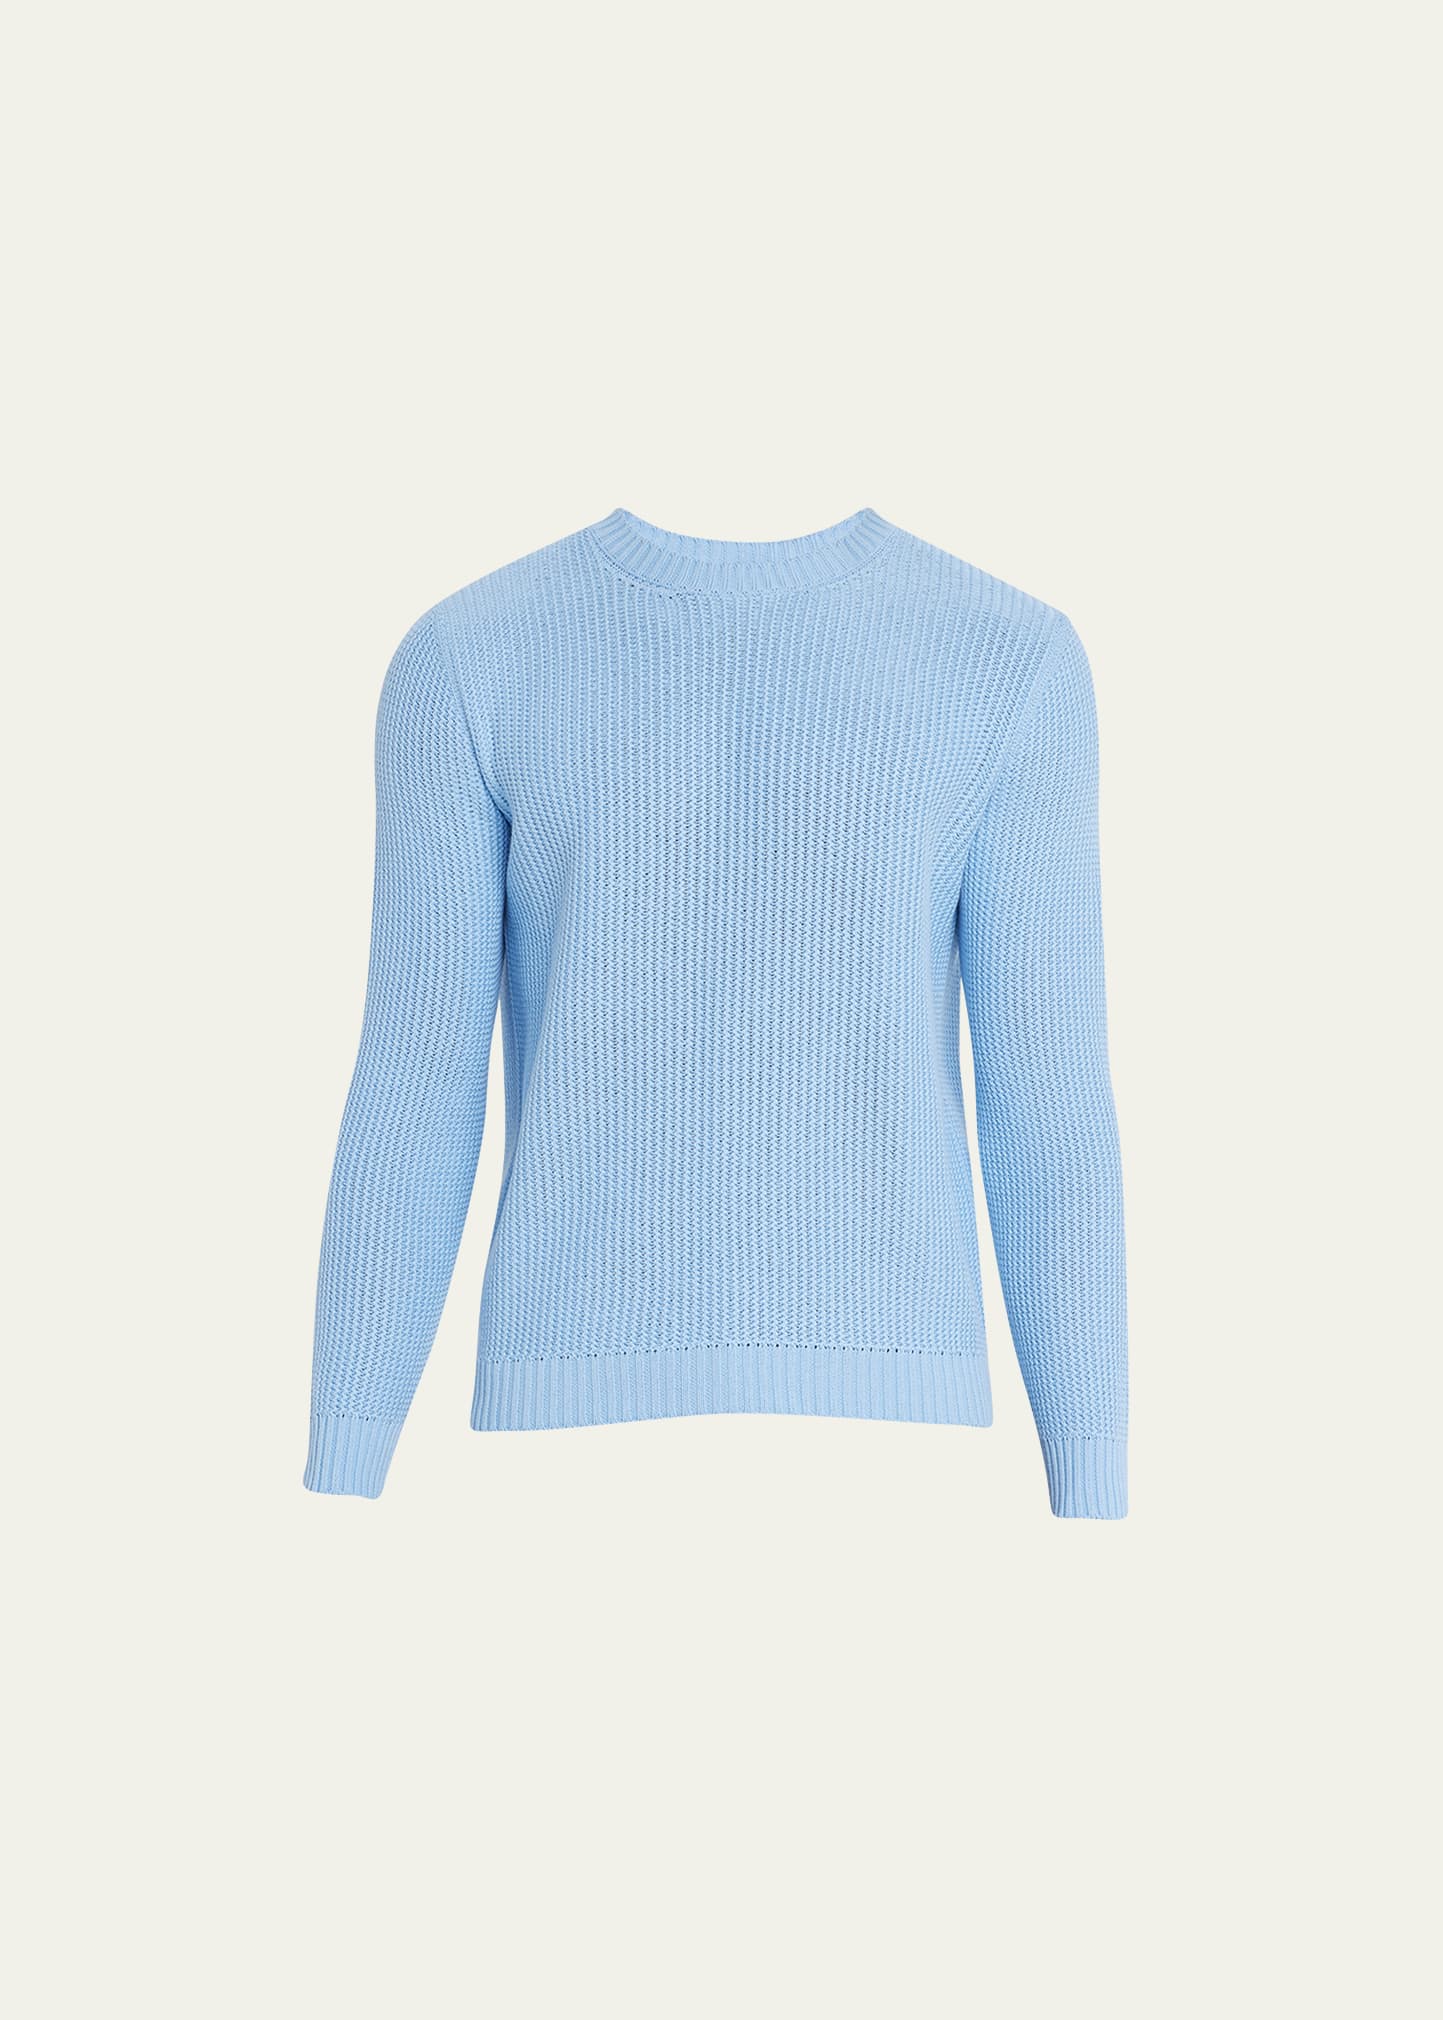 Bergdorf Goodman Men's Cotton Knit Crewneck Sweater